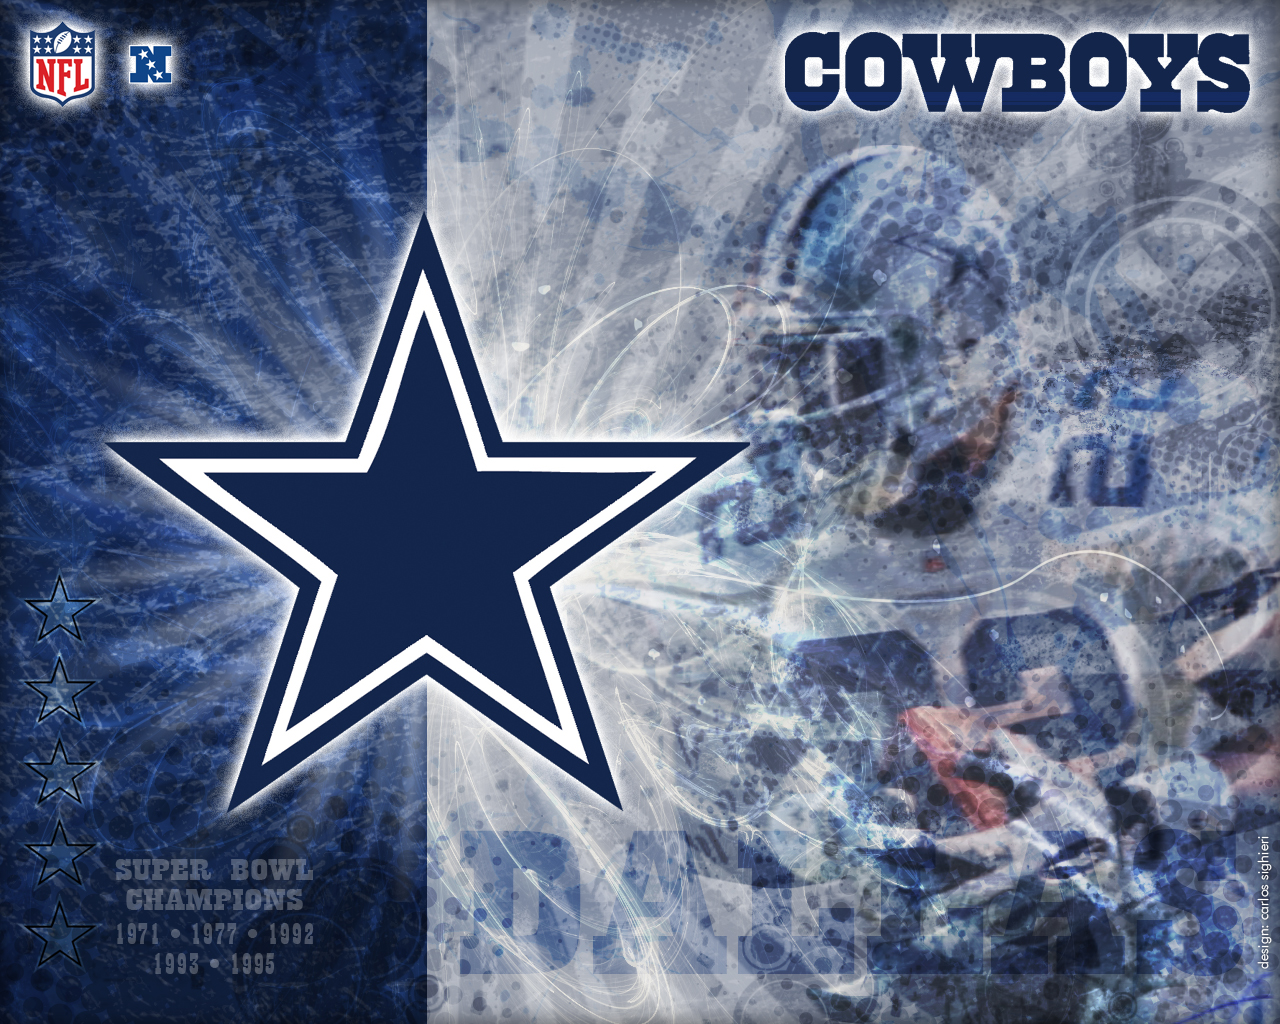  Dallas Cowboys wallpaper desktop wallpaper Dallas Cowboys wallpapers